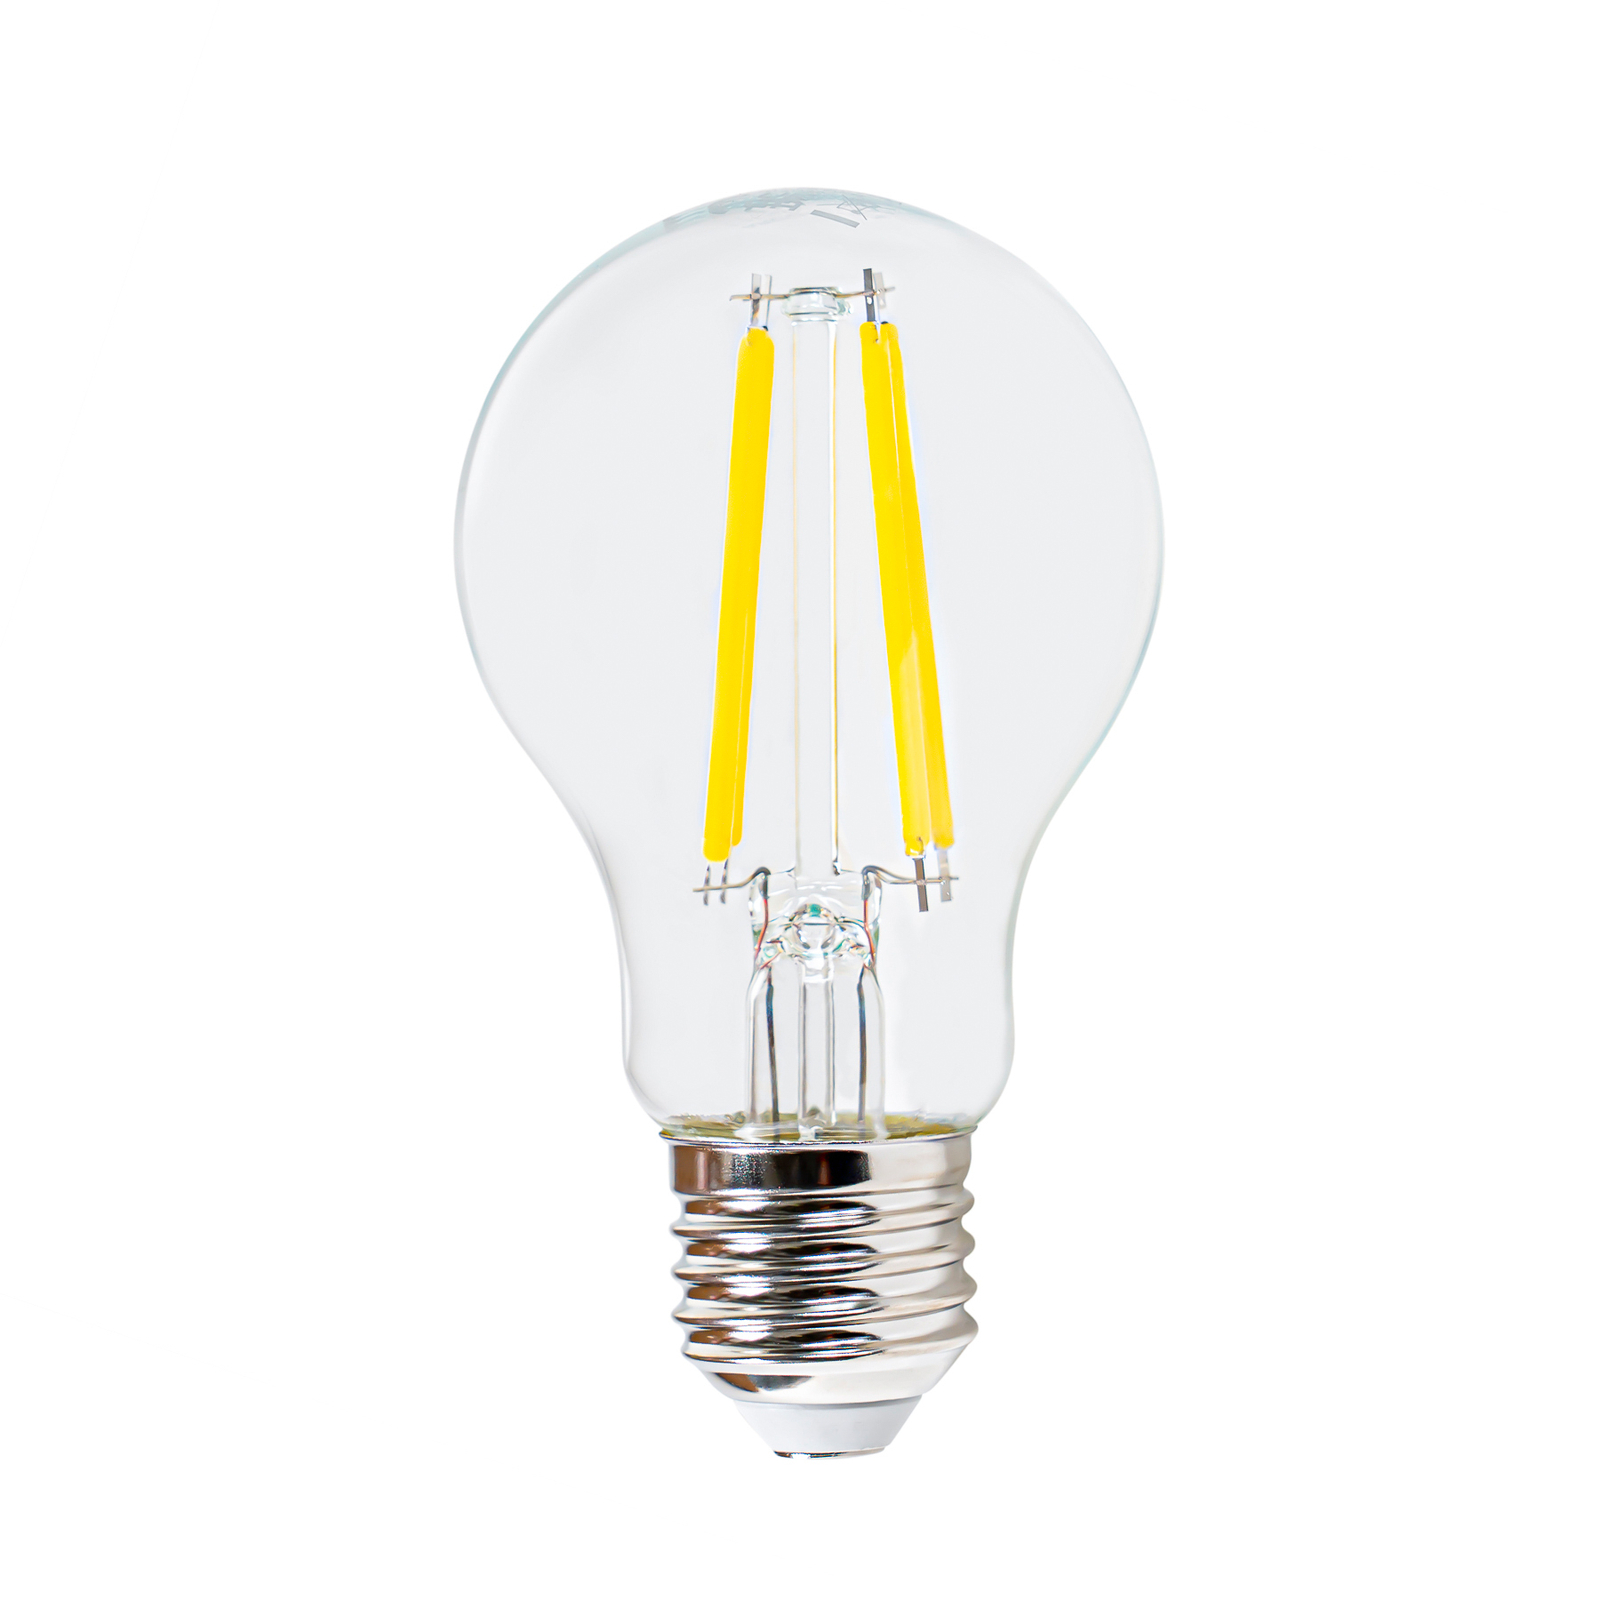 Filament LED bulb E27 5W 3,000K, 1060 lumens, clear